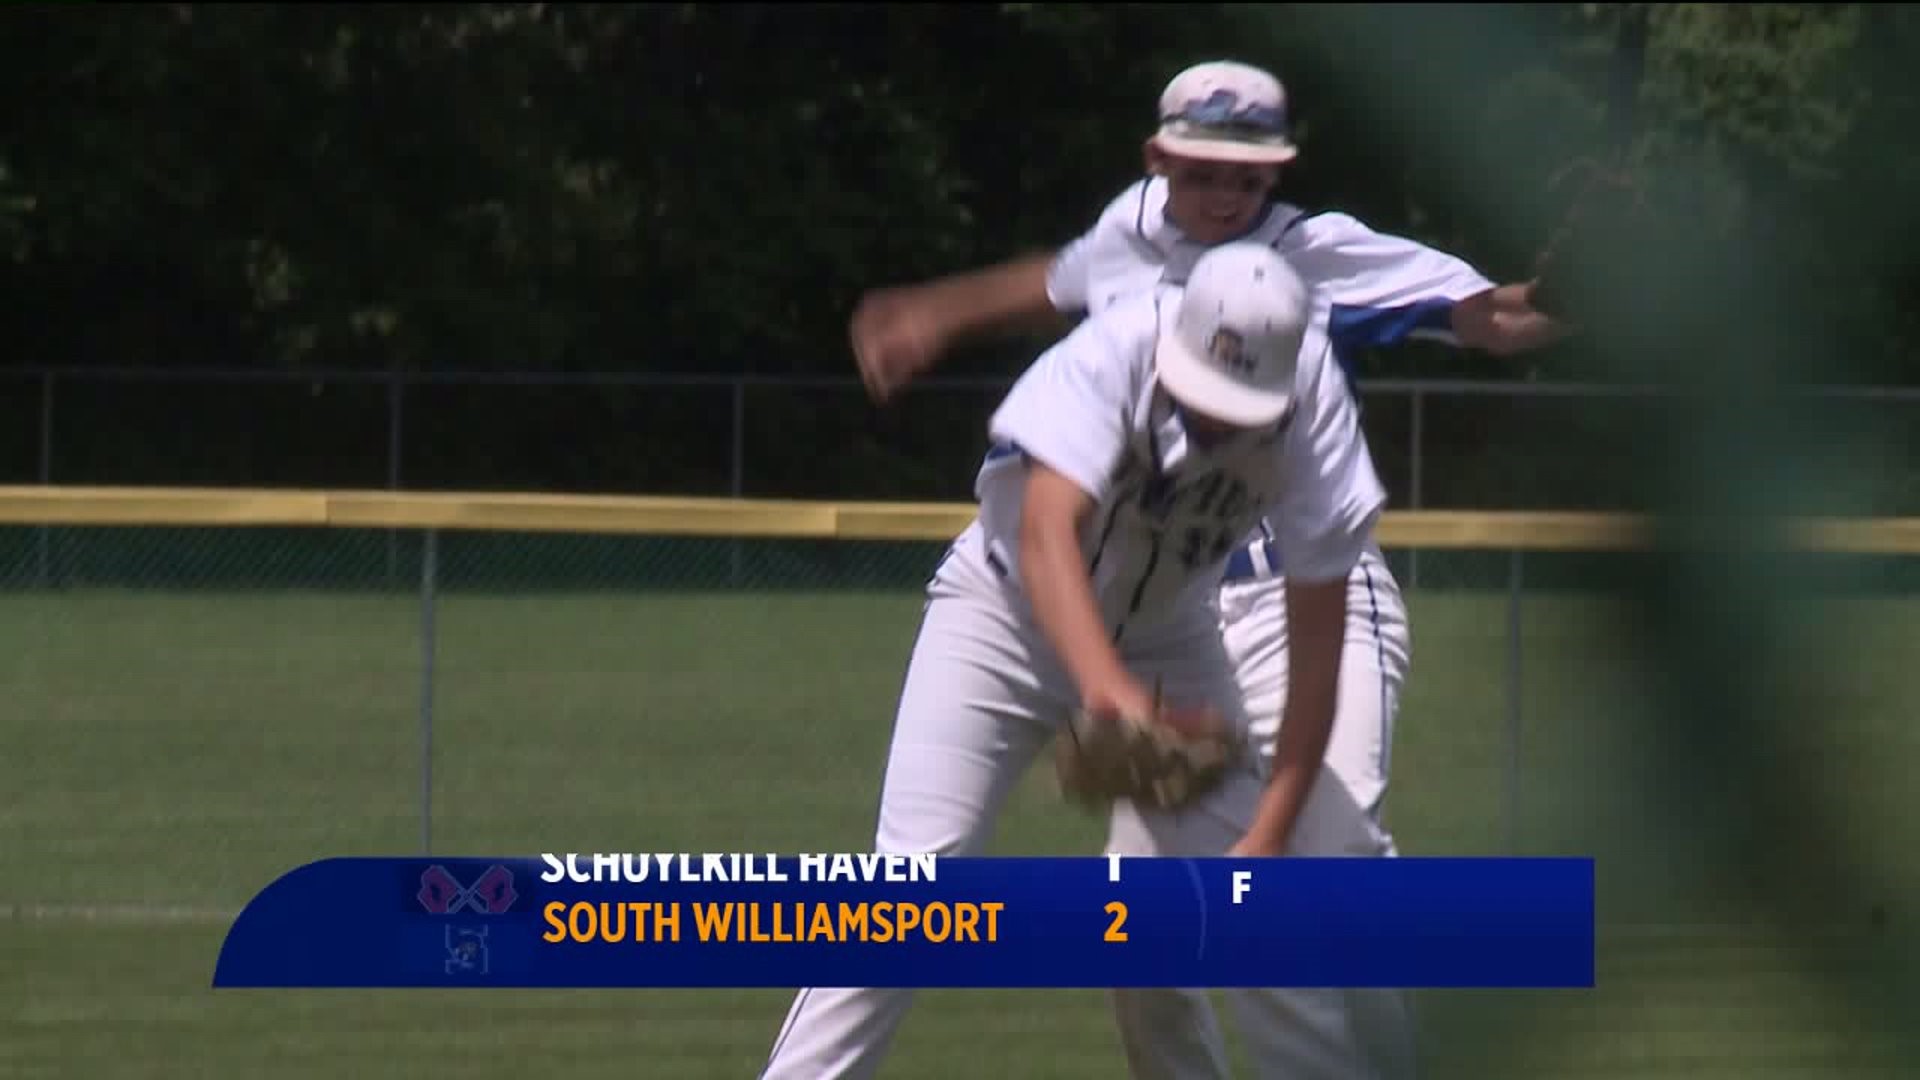 South Williamsport vs Schuylkill Haven baseball